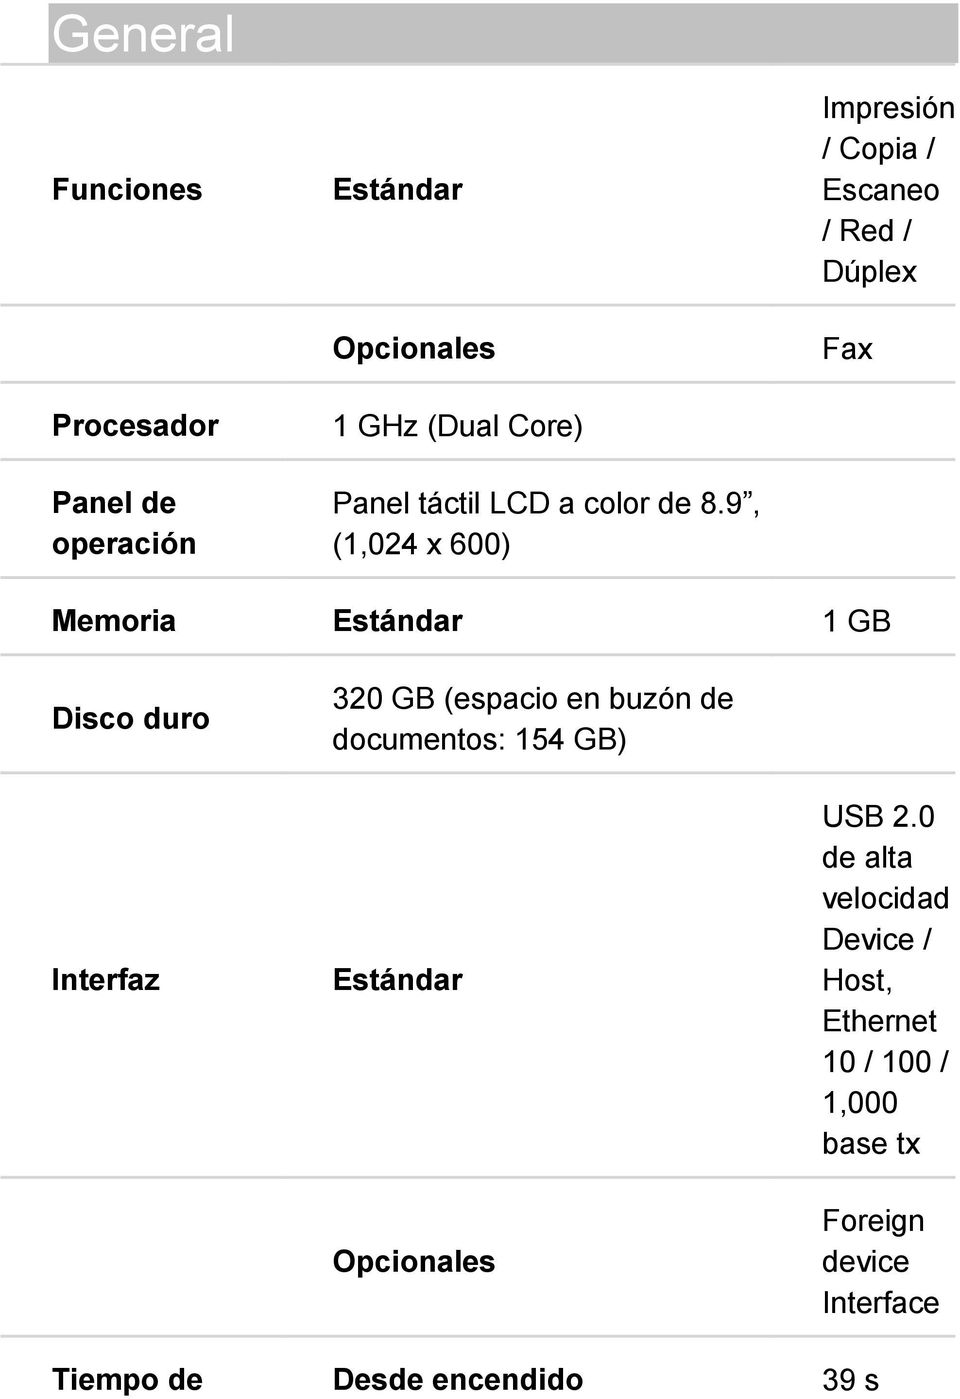 9, (1,024 x 600) Impresión / Copia / Escaneo / Red / Dúplex Fax Memoria Estándar 1 GB Disco duro